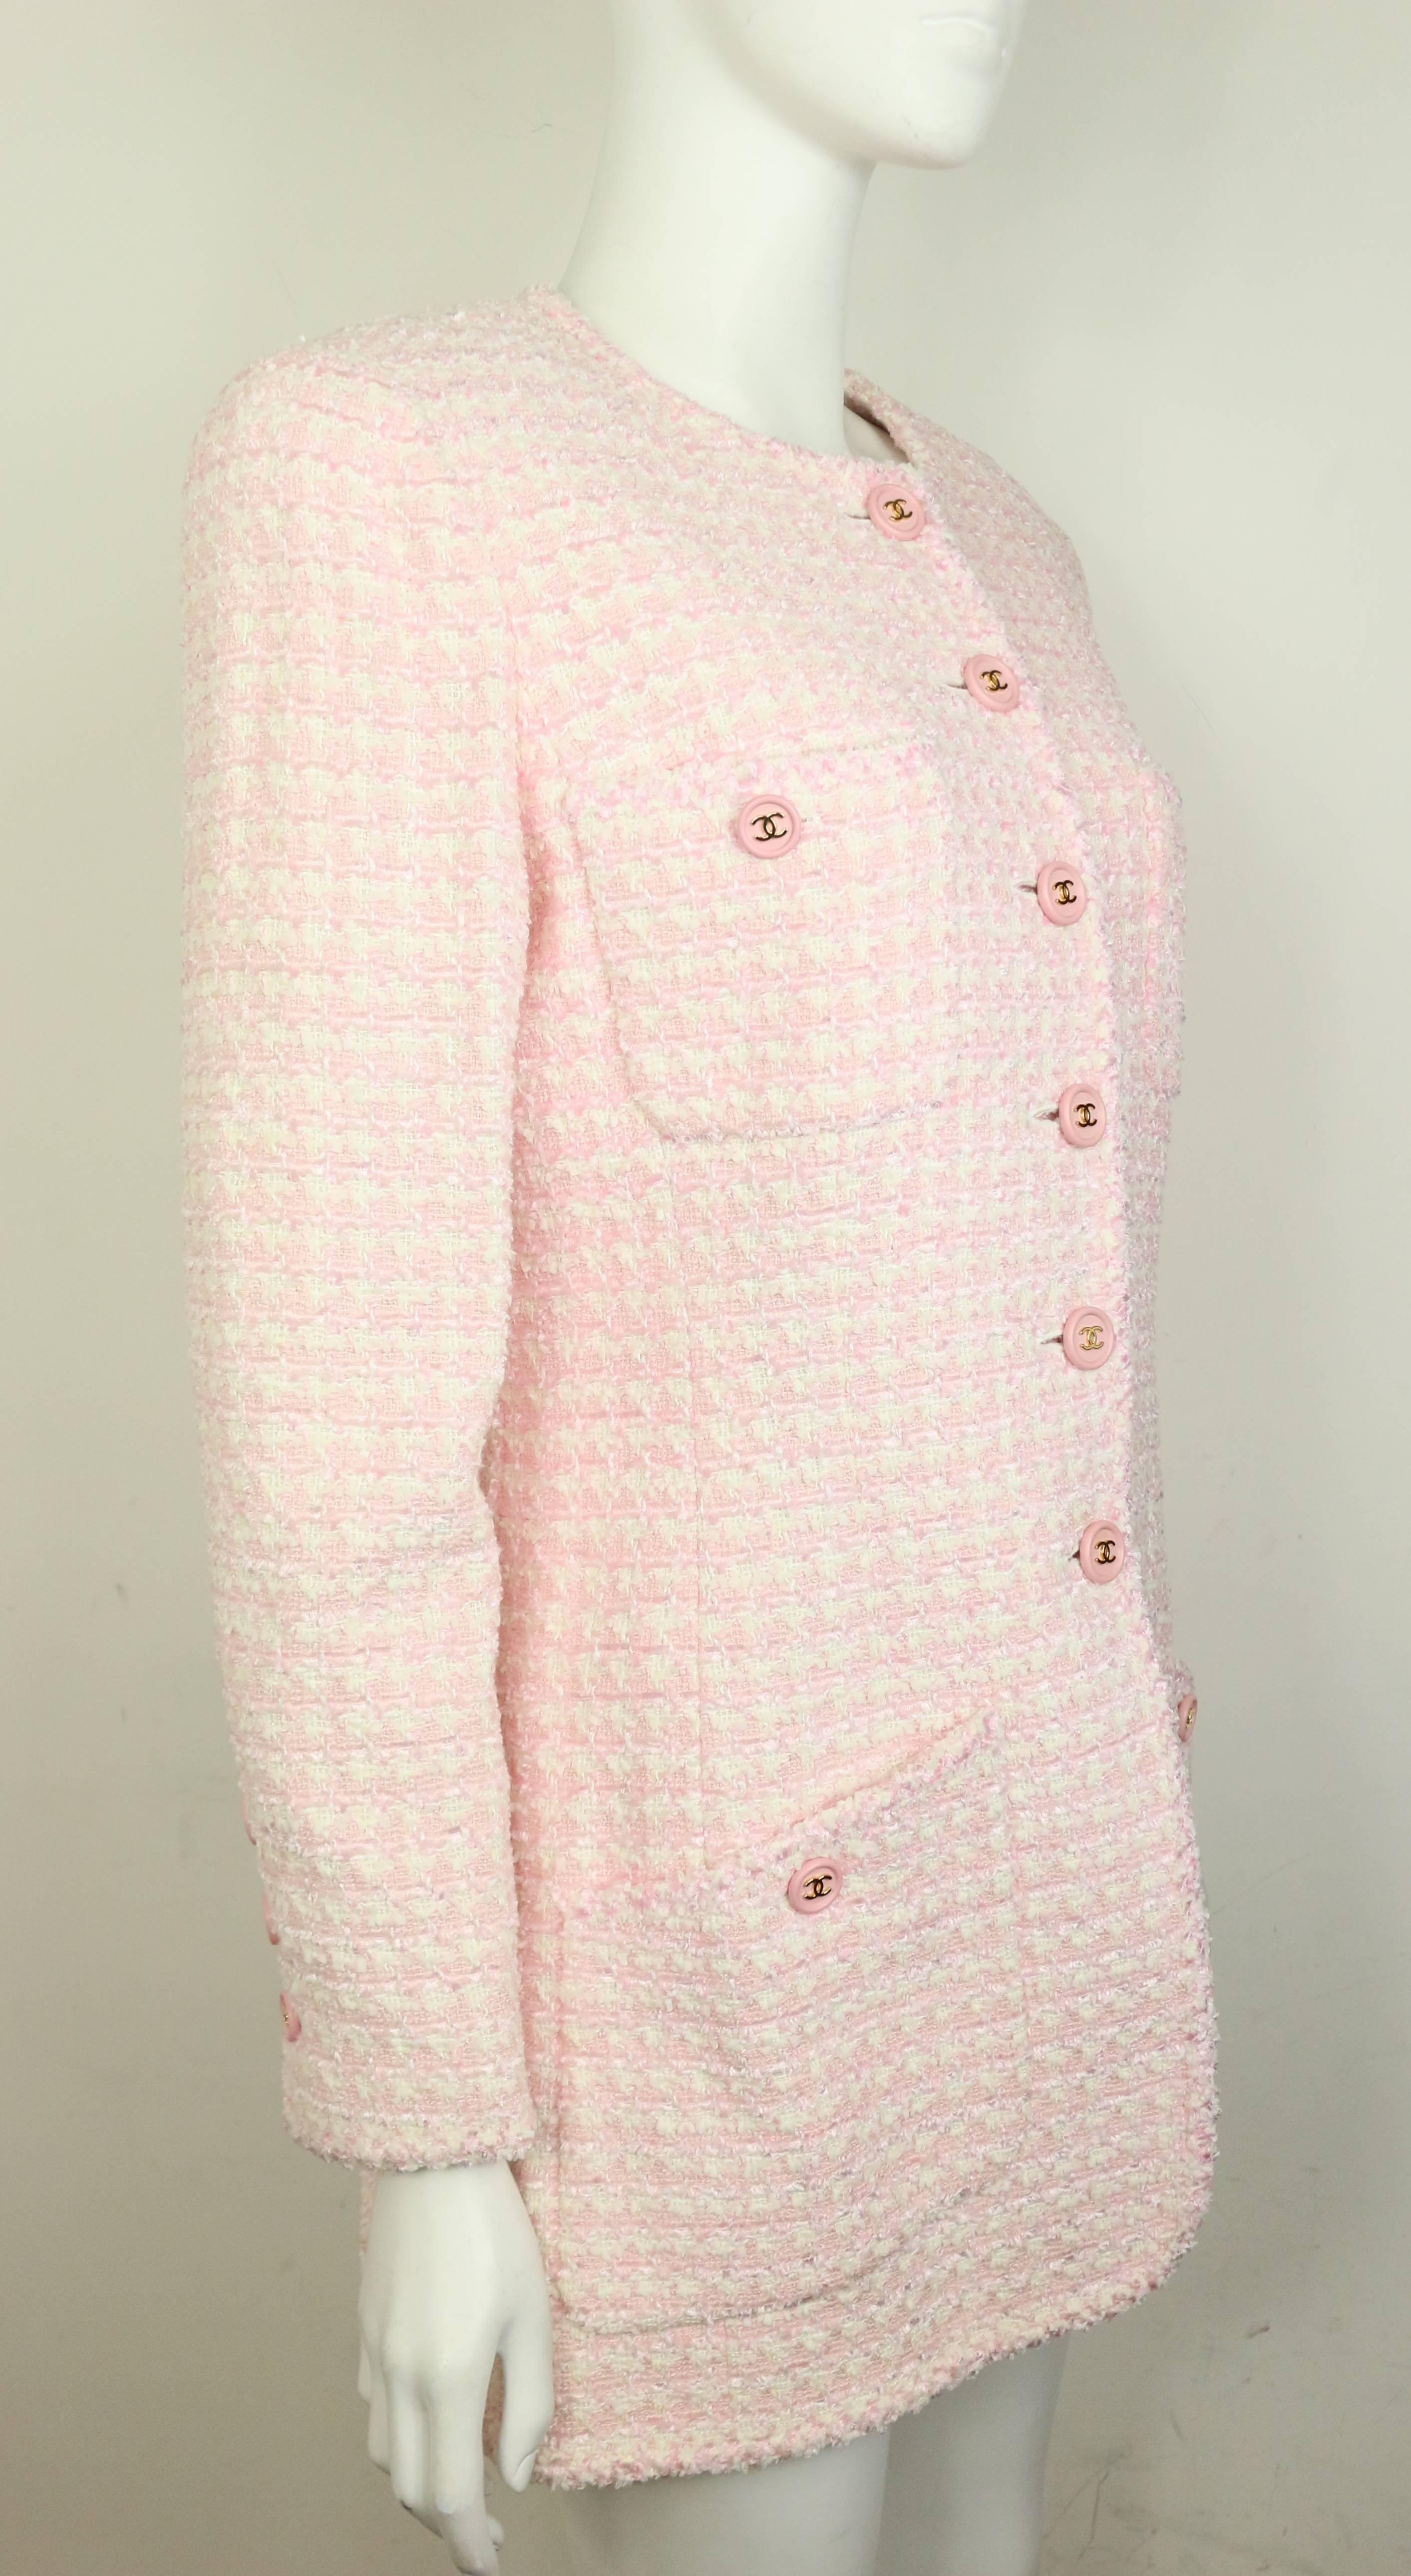 chanel pink tweed jacket